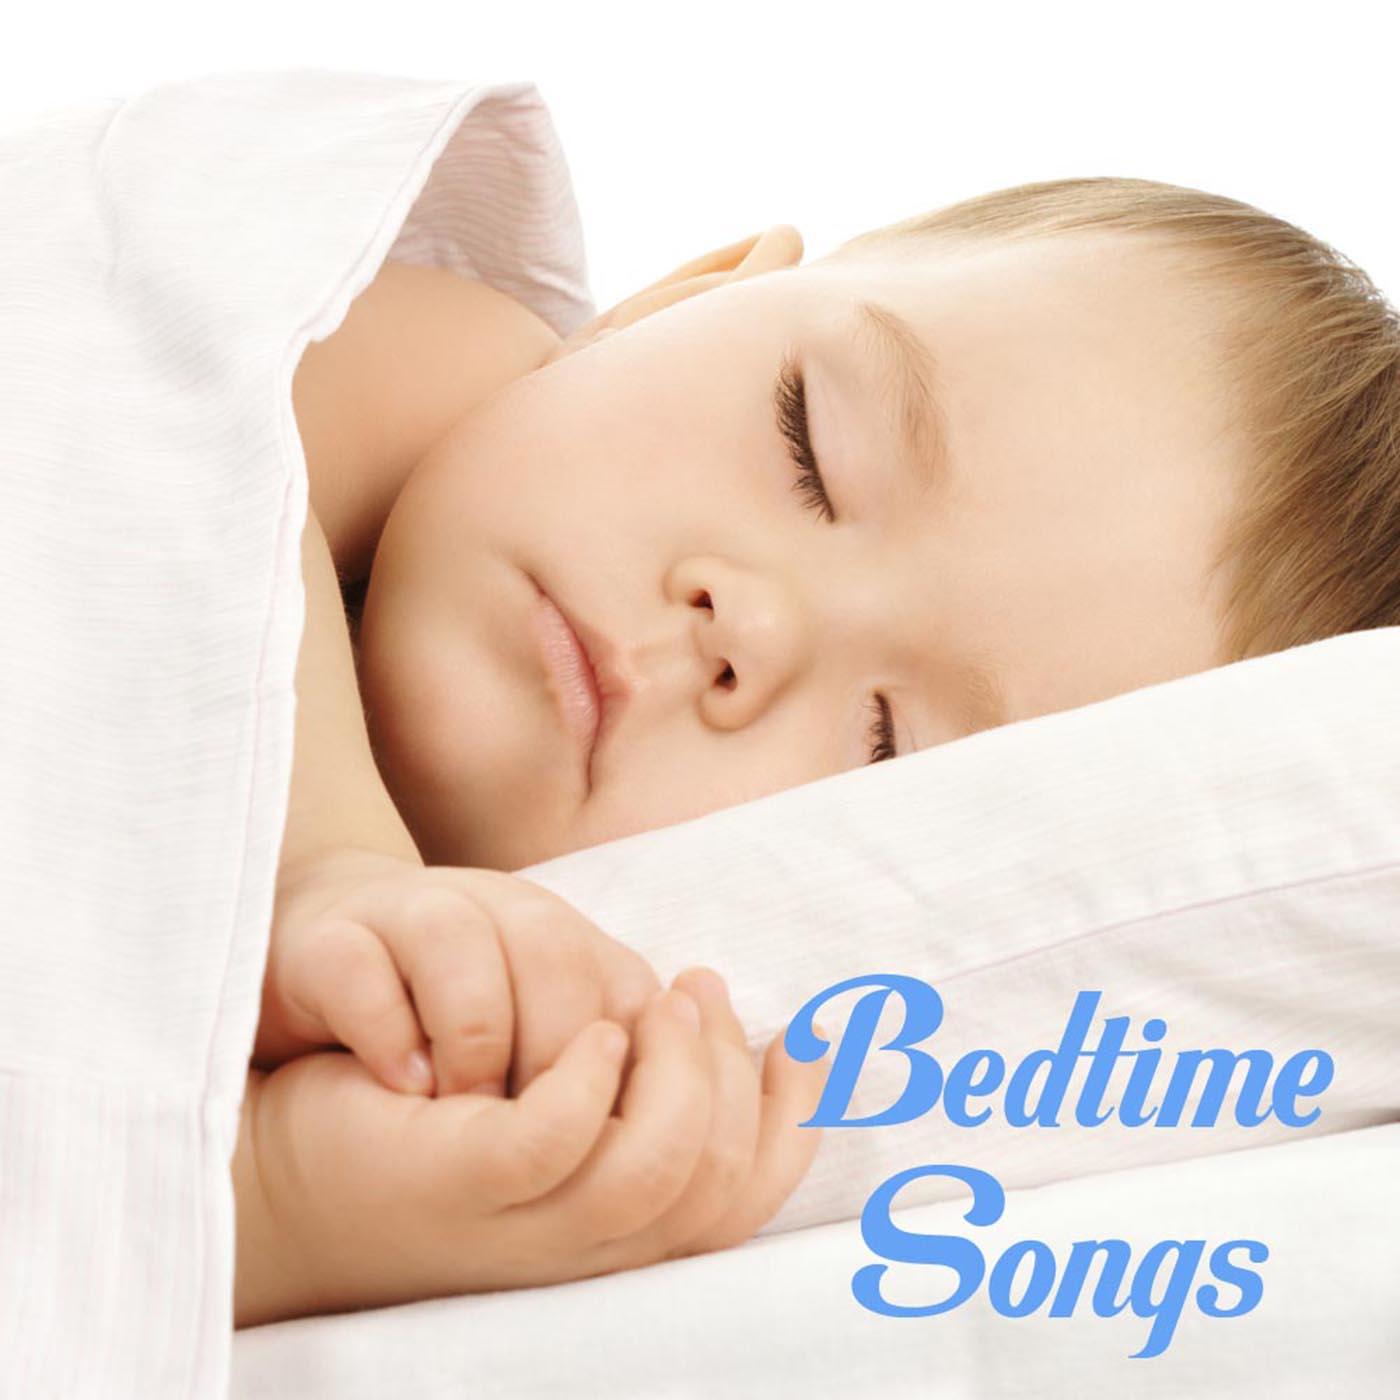 Bedtime Songs (Bedtime Music Relax, Kids Sleep Nature Music, Instrumental Lullaby Songs)